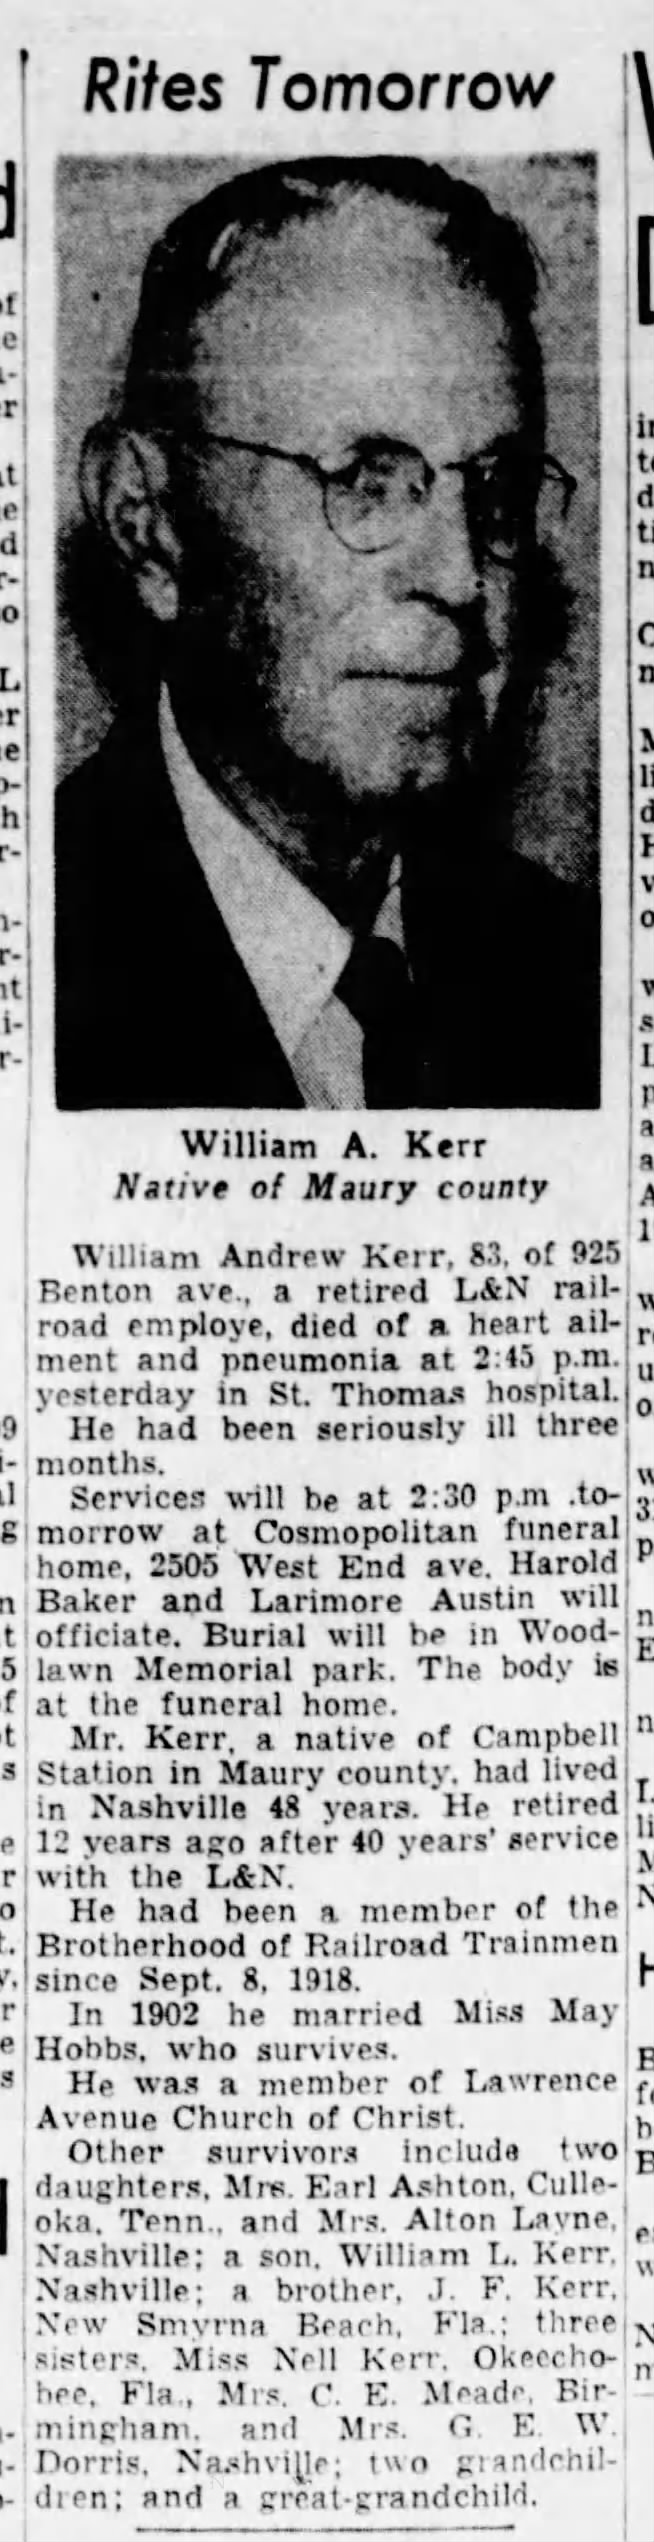 William A Kerr Obituary, The Tennessean (Nashville, TN) Fri - 20 May 1960